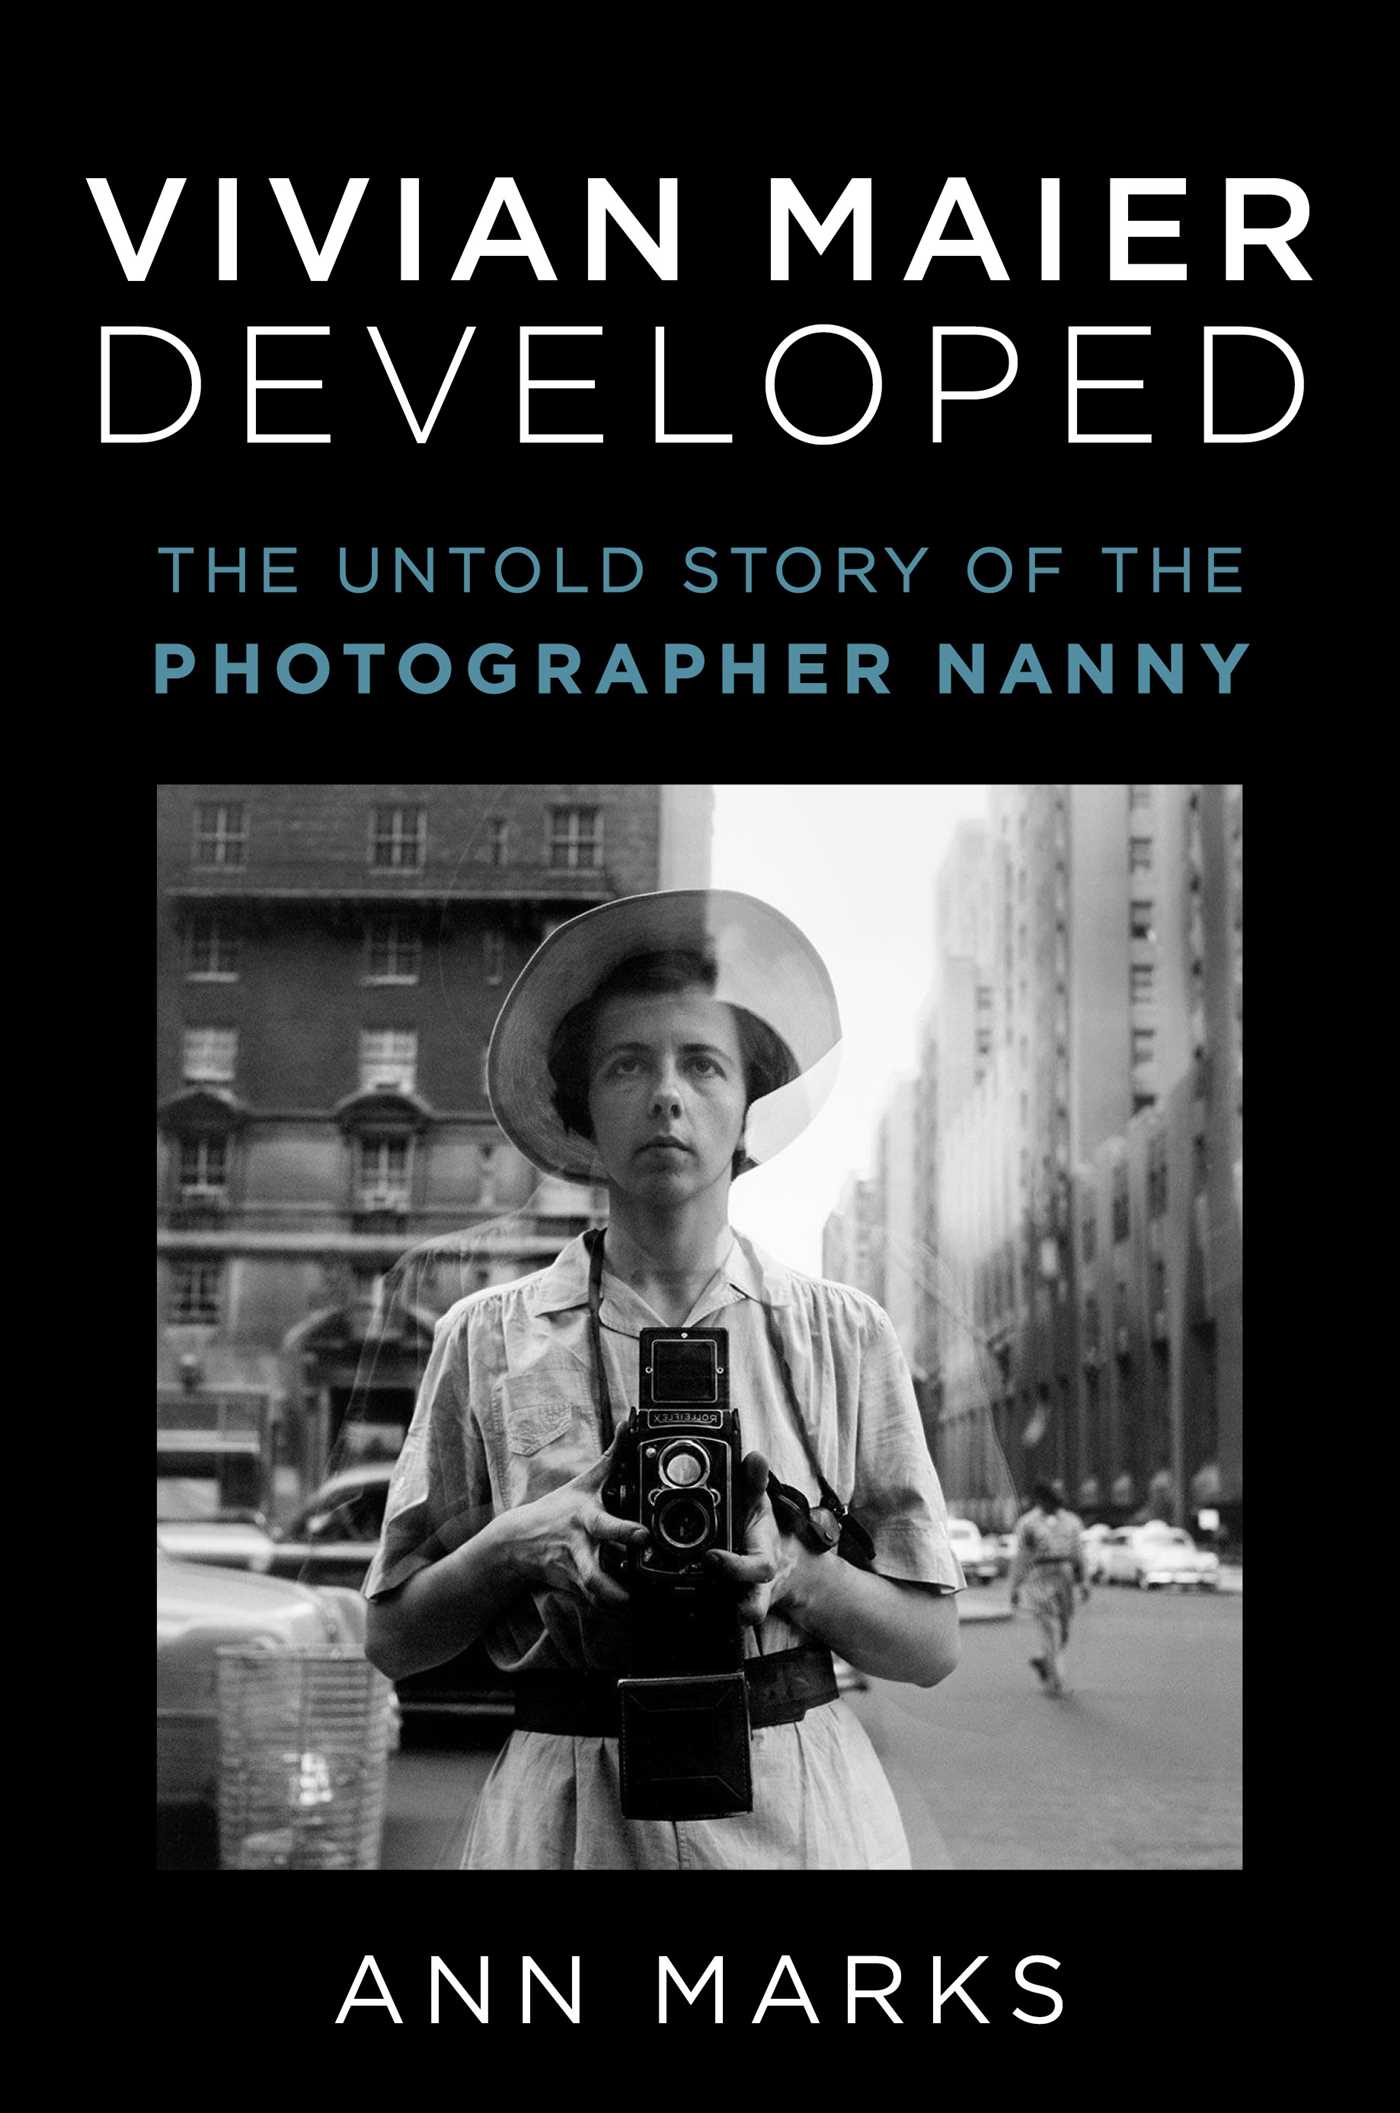 Vivian Maier's biography